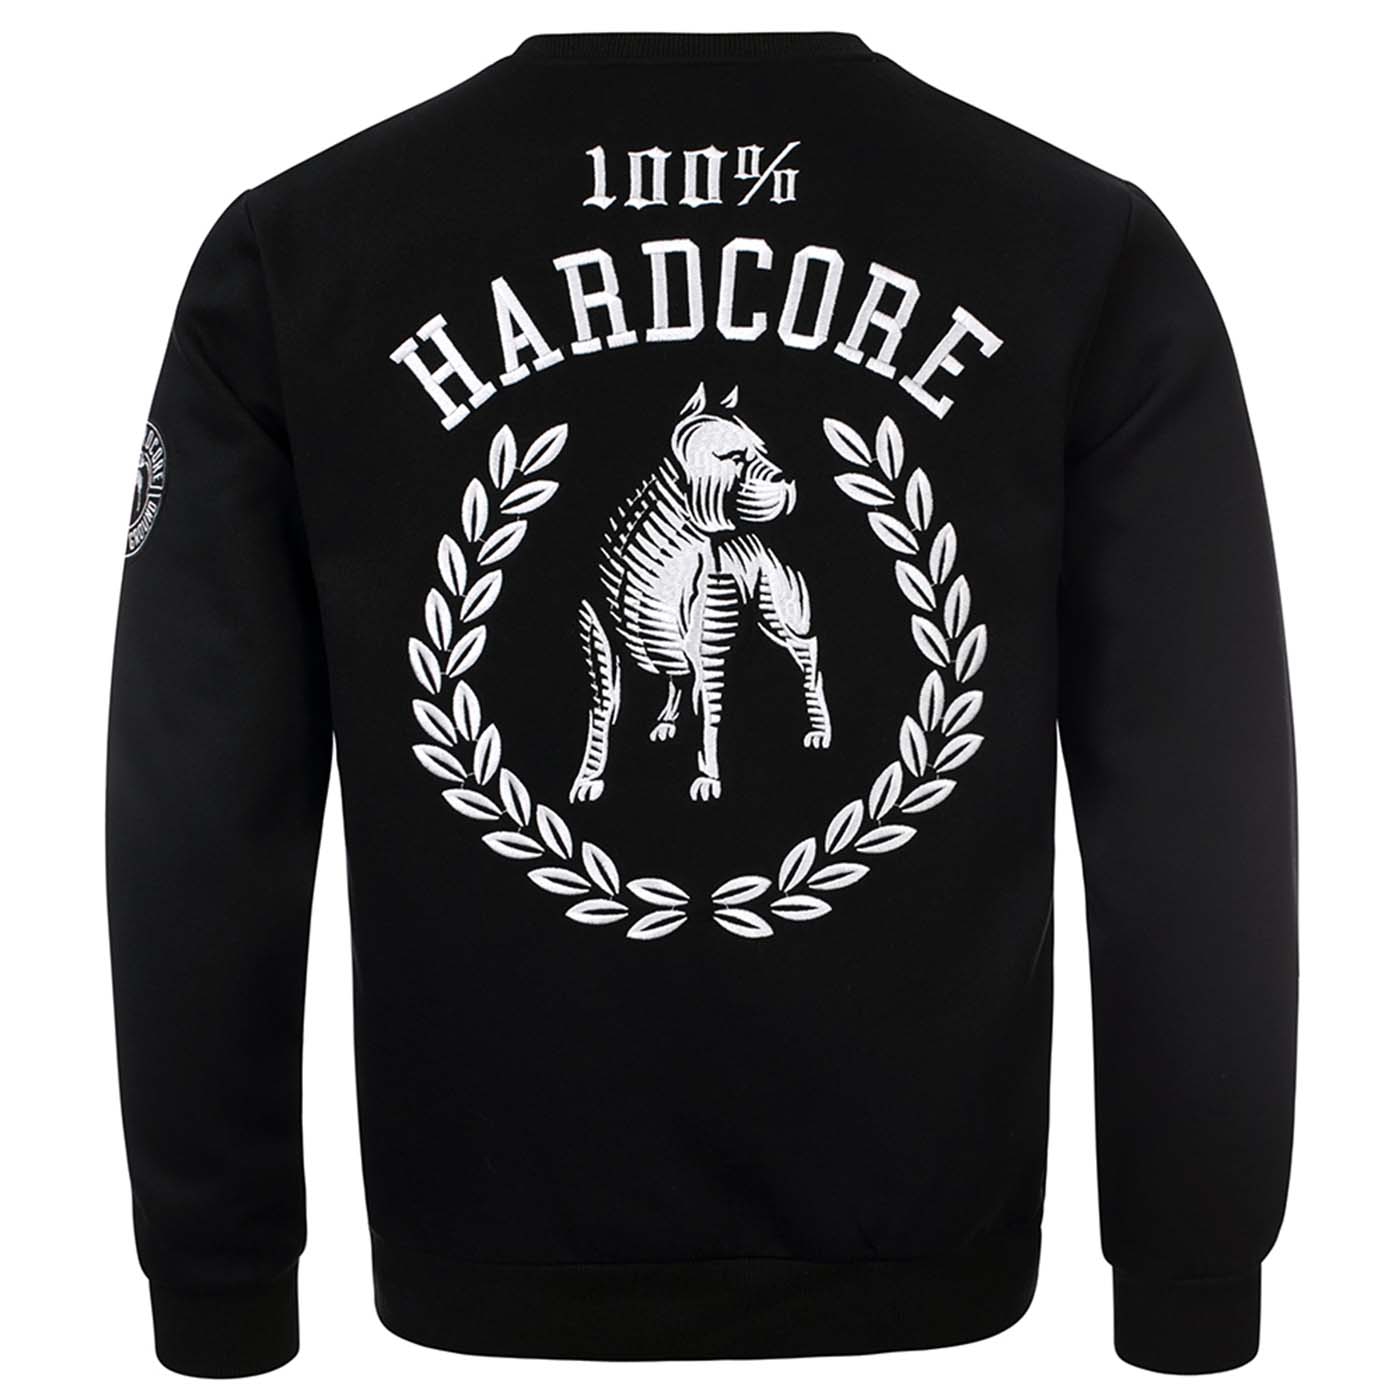 100% Hardcore Crewneck Standing The Ground (302105050) Sweater - Rigeshop